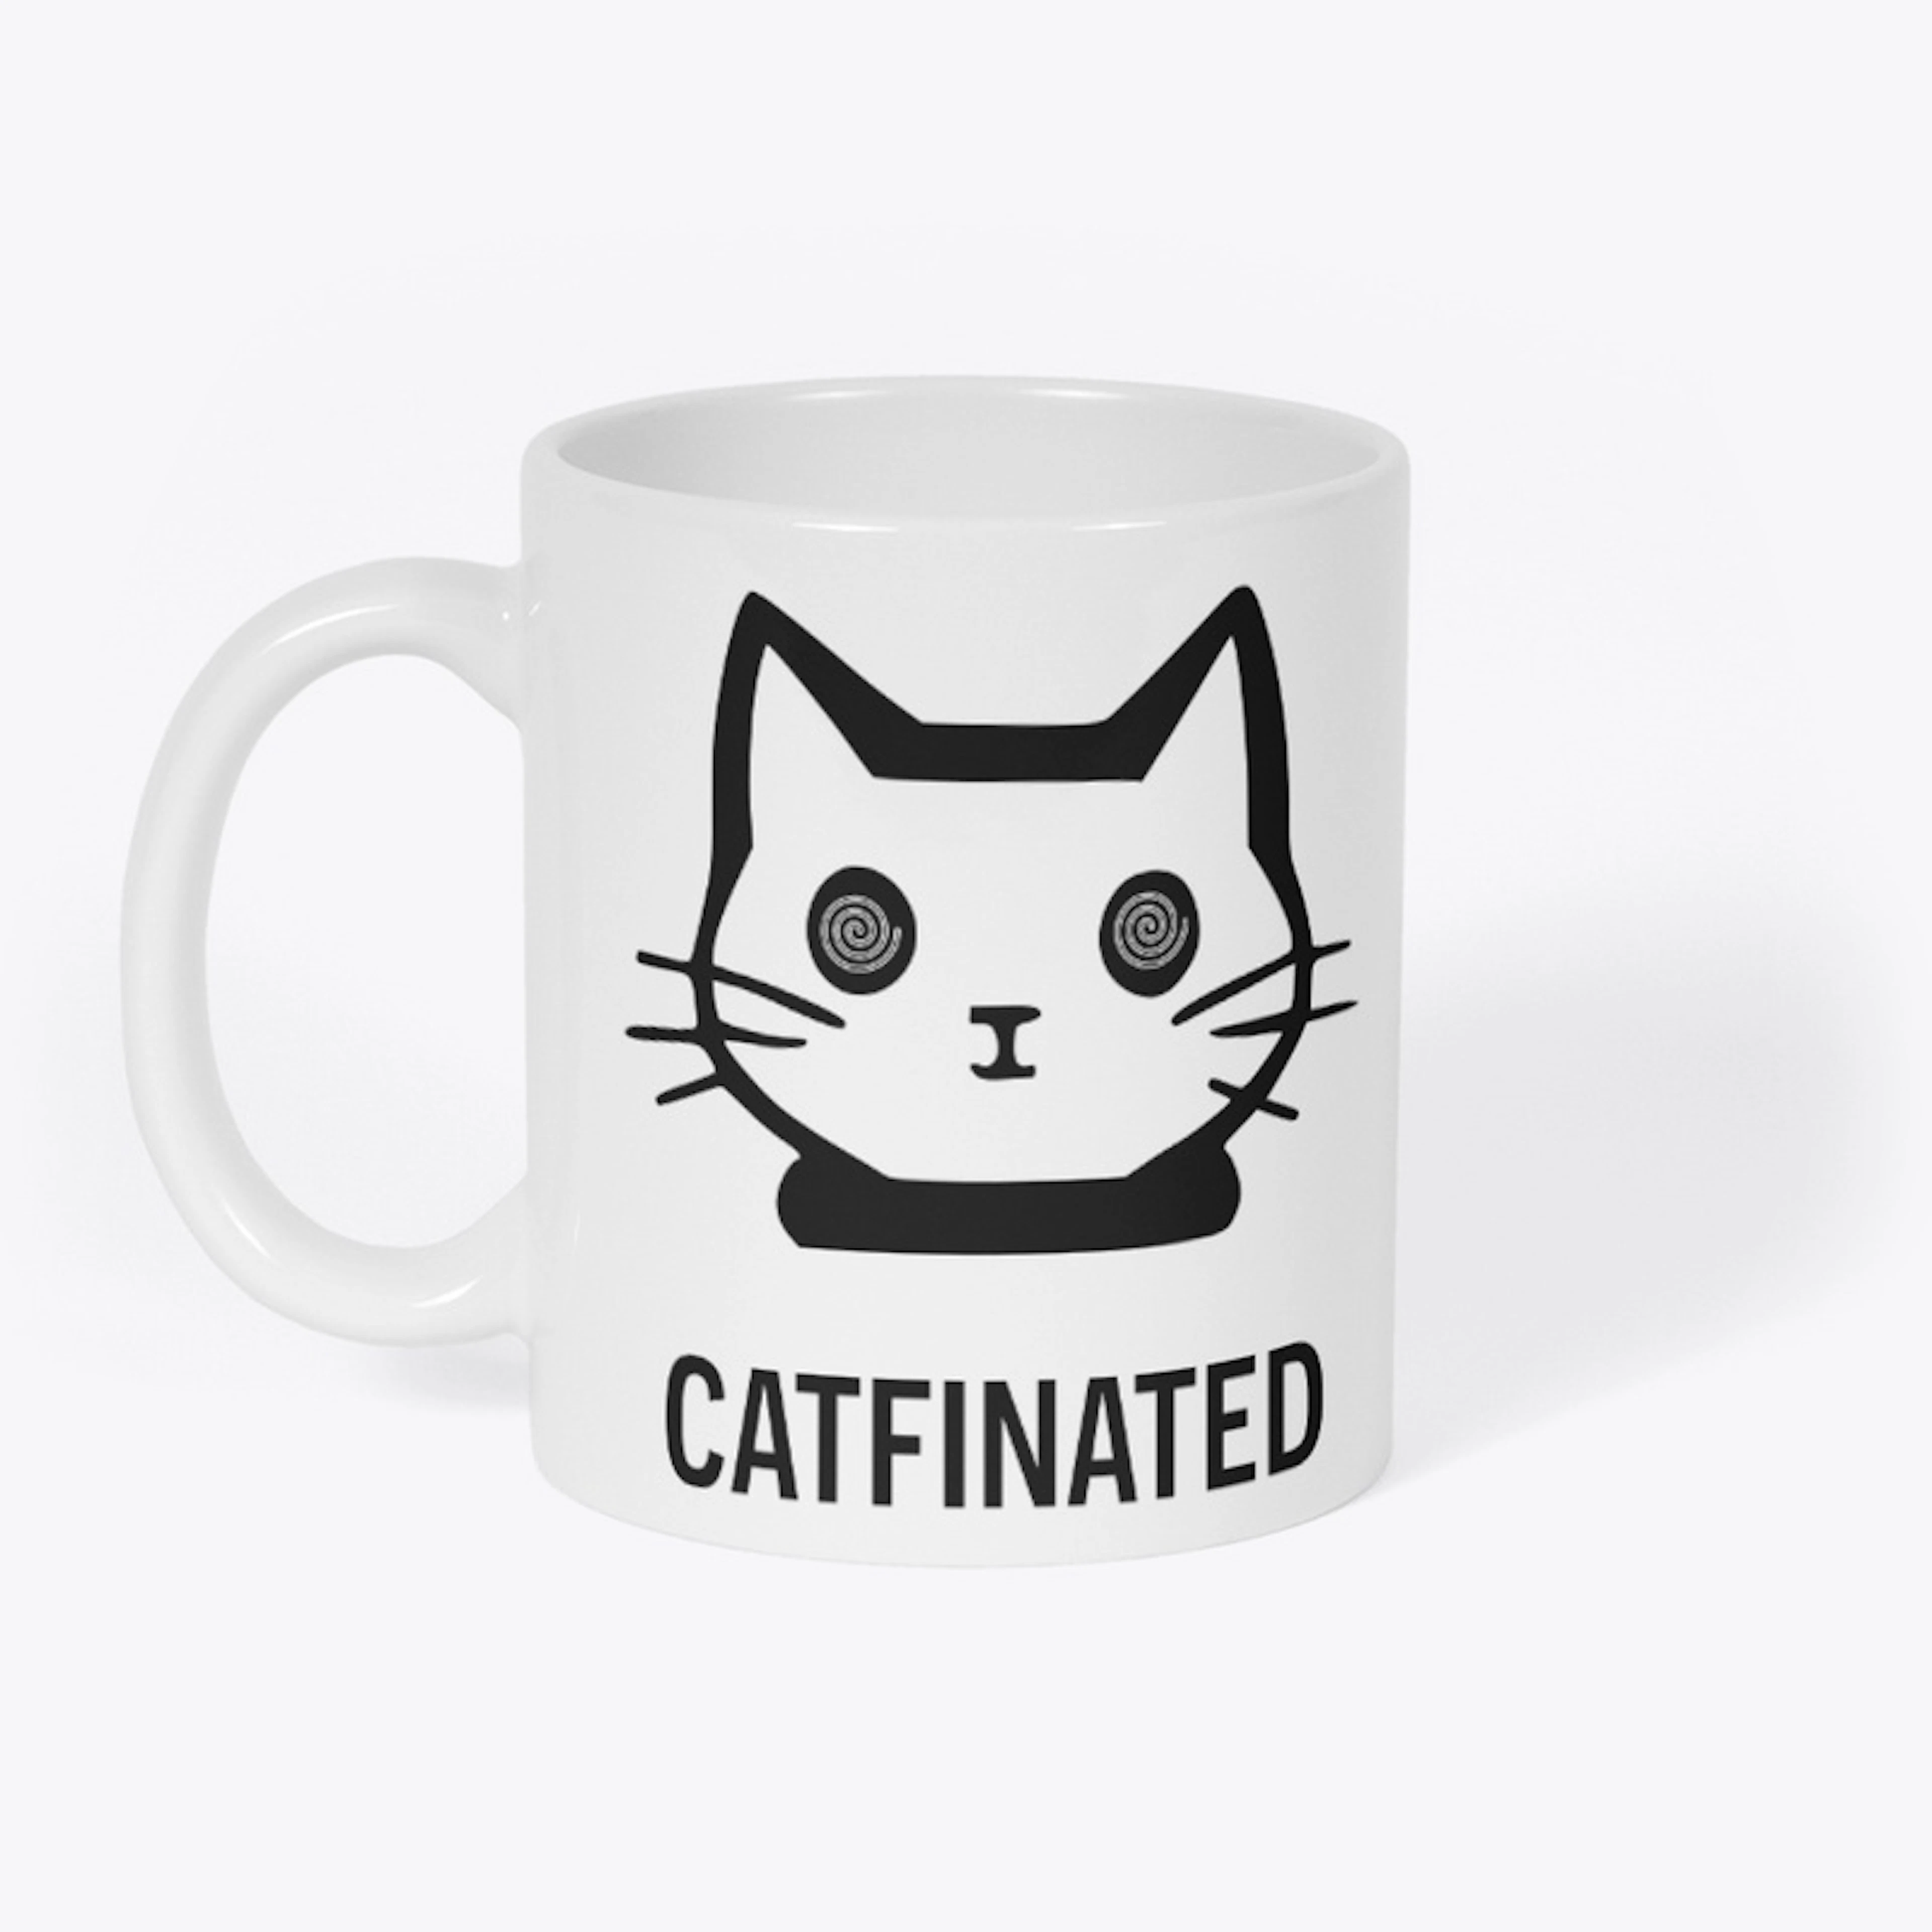 Catfinated Mug